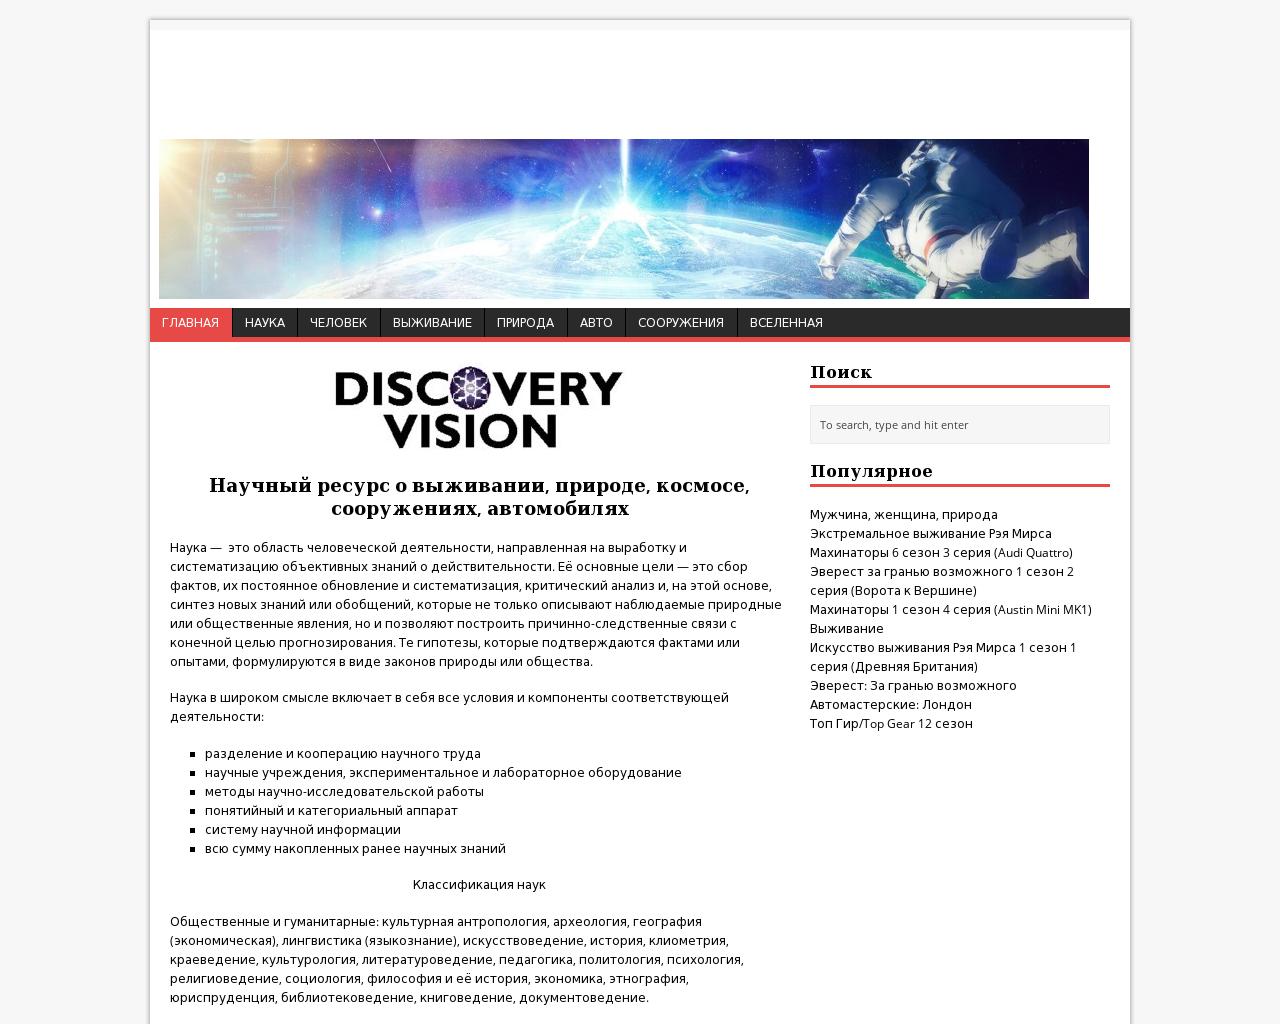 Изображение сайта discovery-vision.ru в разрешении 1280x1024